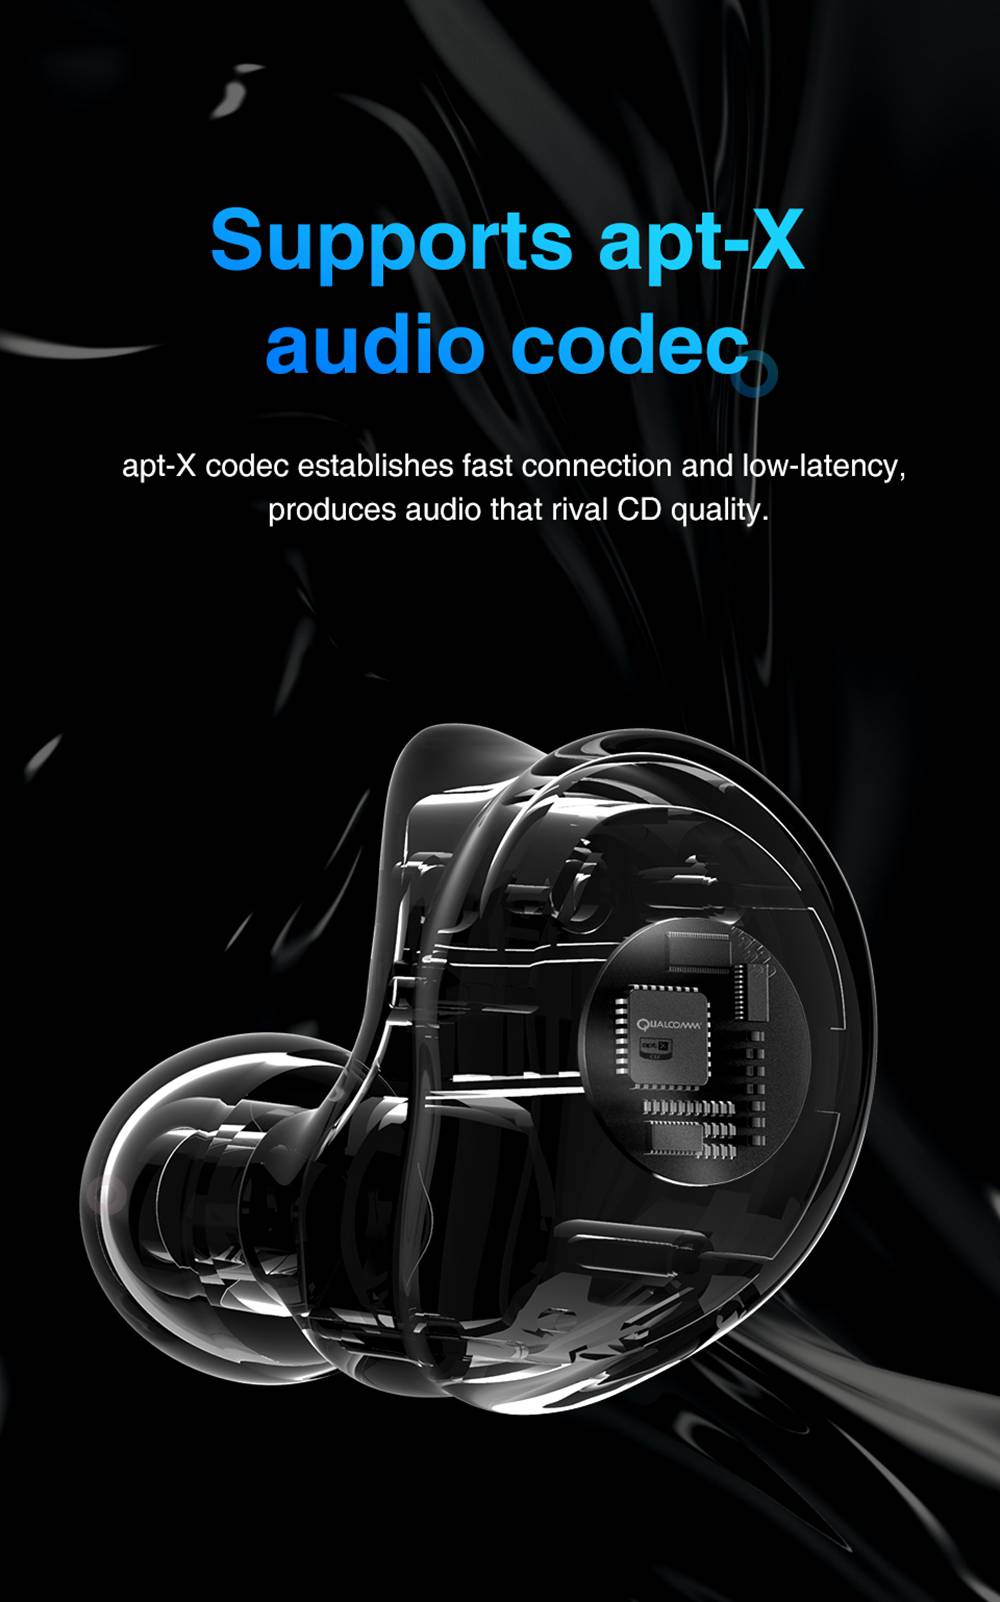 TRN T200 CVC 8.0 Earphones Qualcomm QCC3020 Volume Control aptX /AAC/ SBC Siri IPX5 7 Hours Playtime - Black